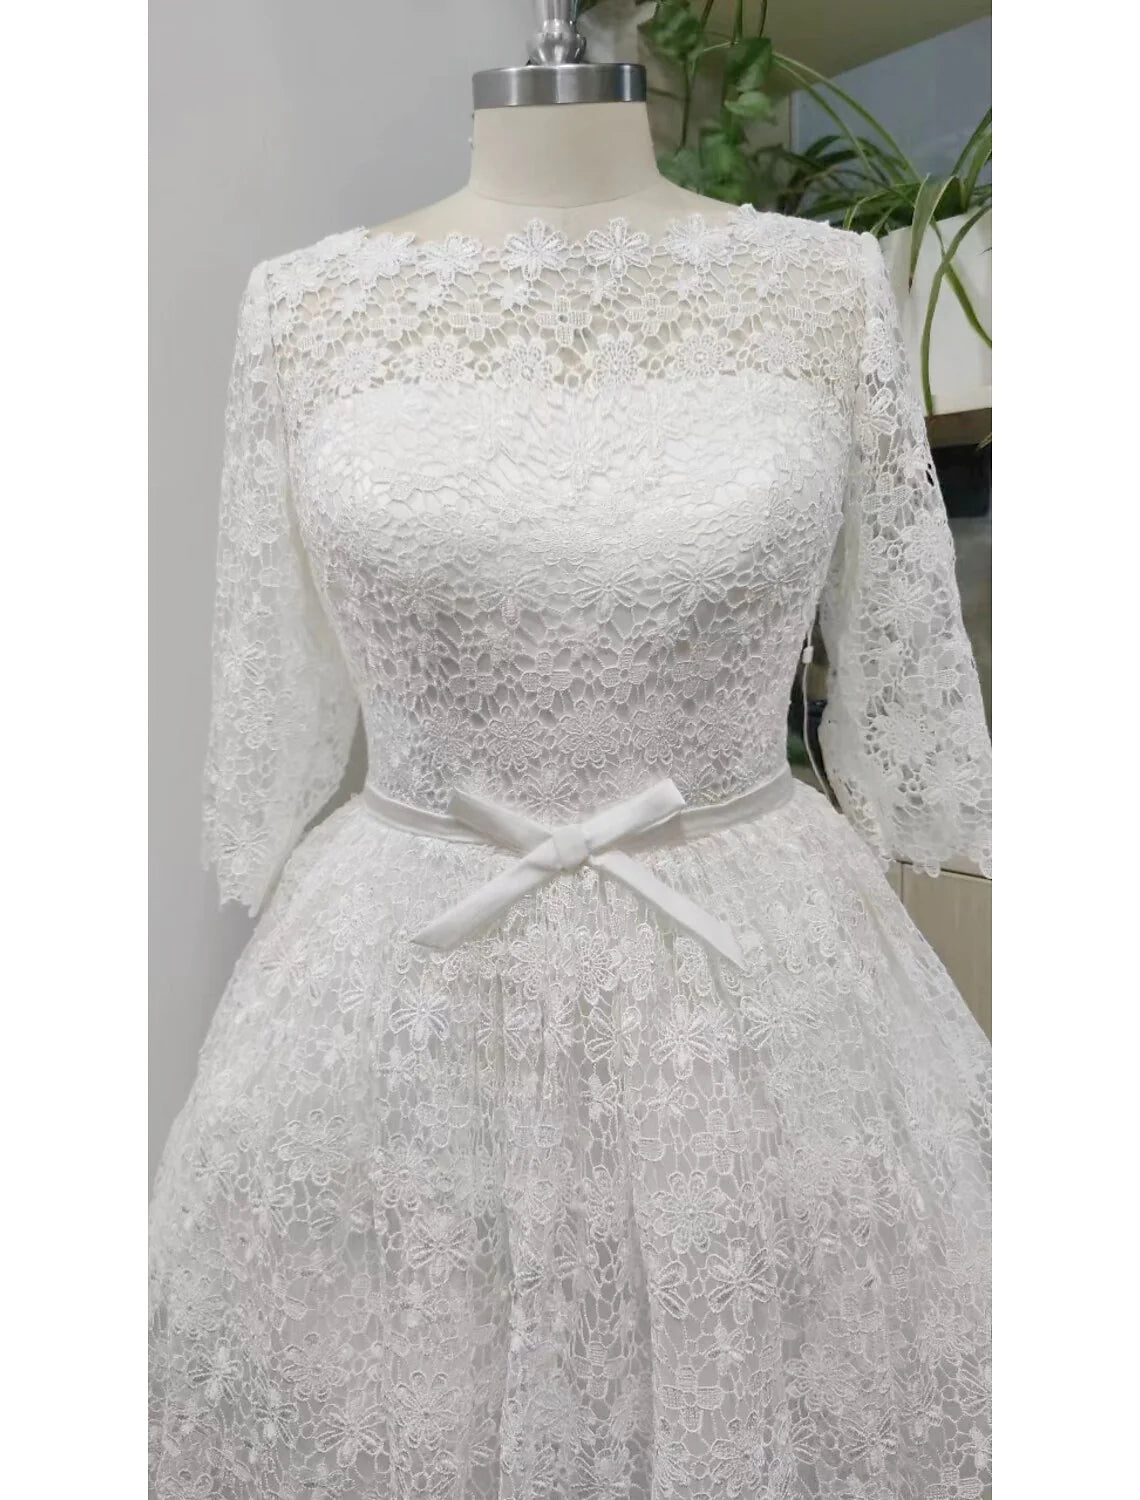 Reception Vintage 1940s / 1950s Simple Wedding Dresses Wedding Dresses A-Line Illusion Neck 3/4 Length Sleeve Tea Length Lace Bridal Gowns With Appliques